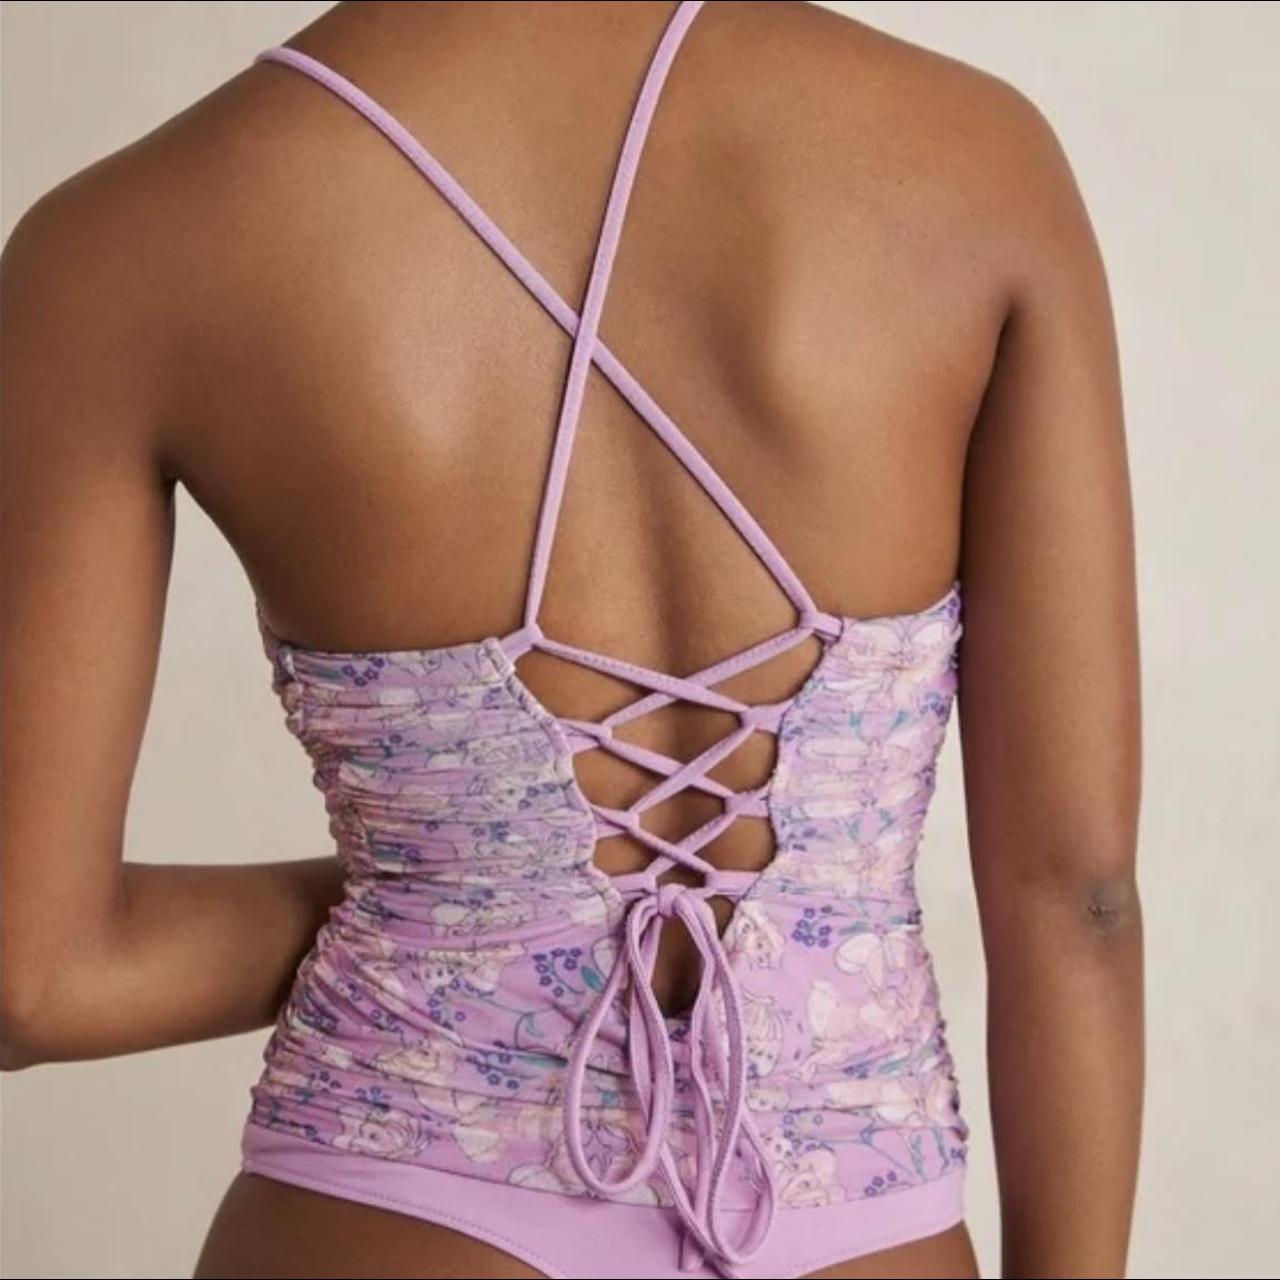 Lace-Up Bodysuit in Violet Pink